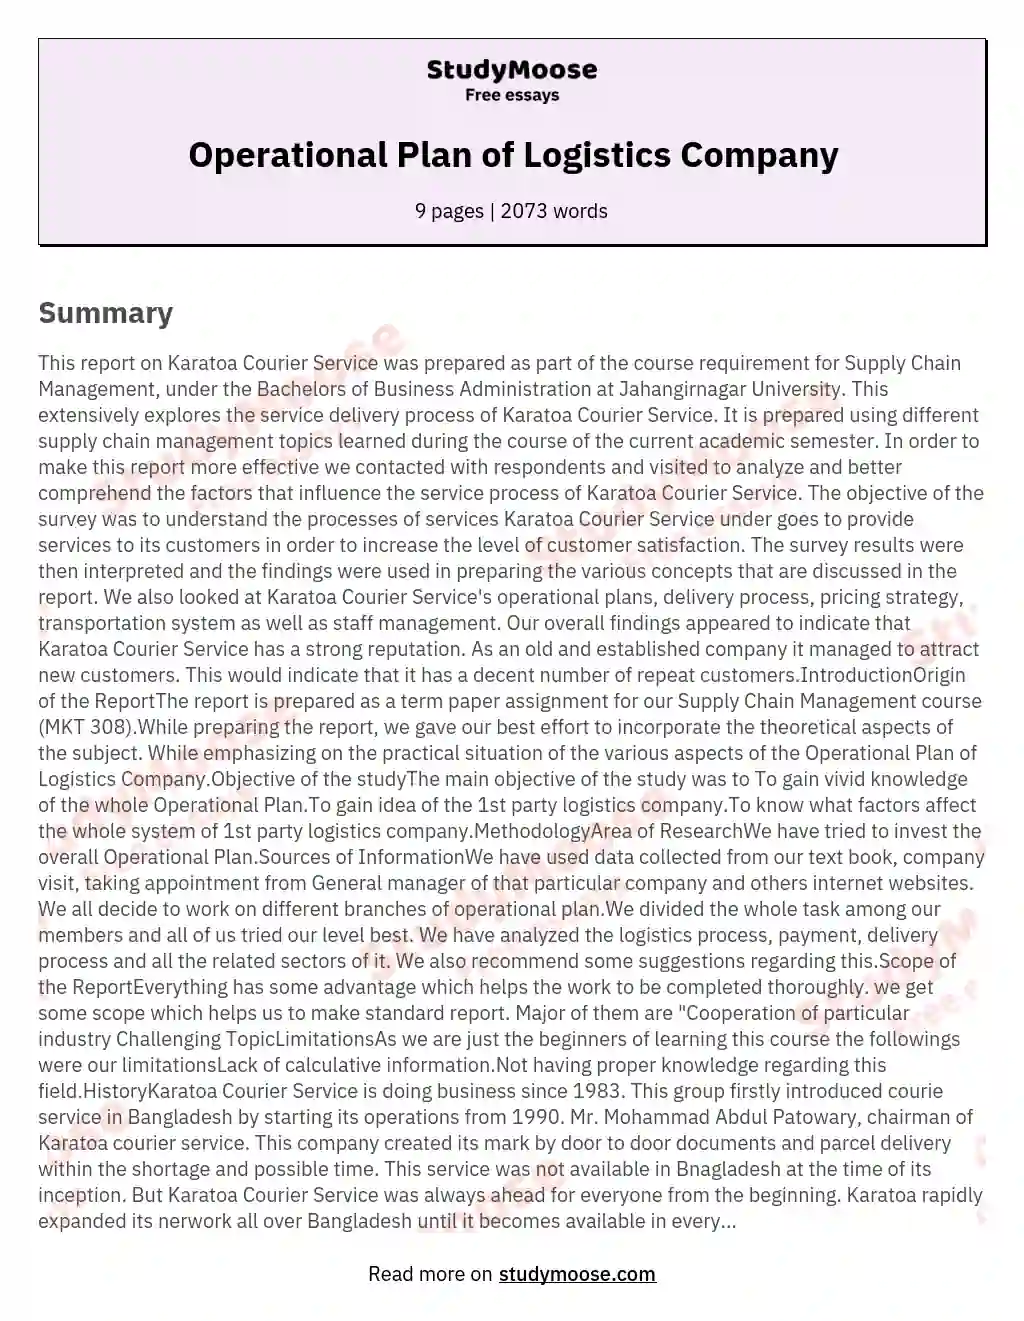 Operational Plan of Logistics Company essay